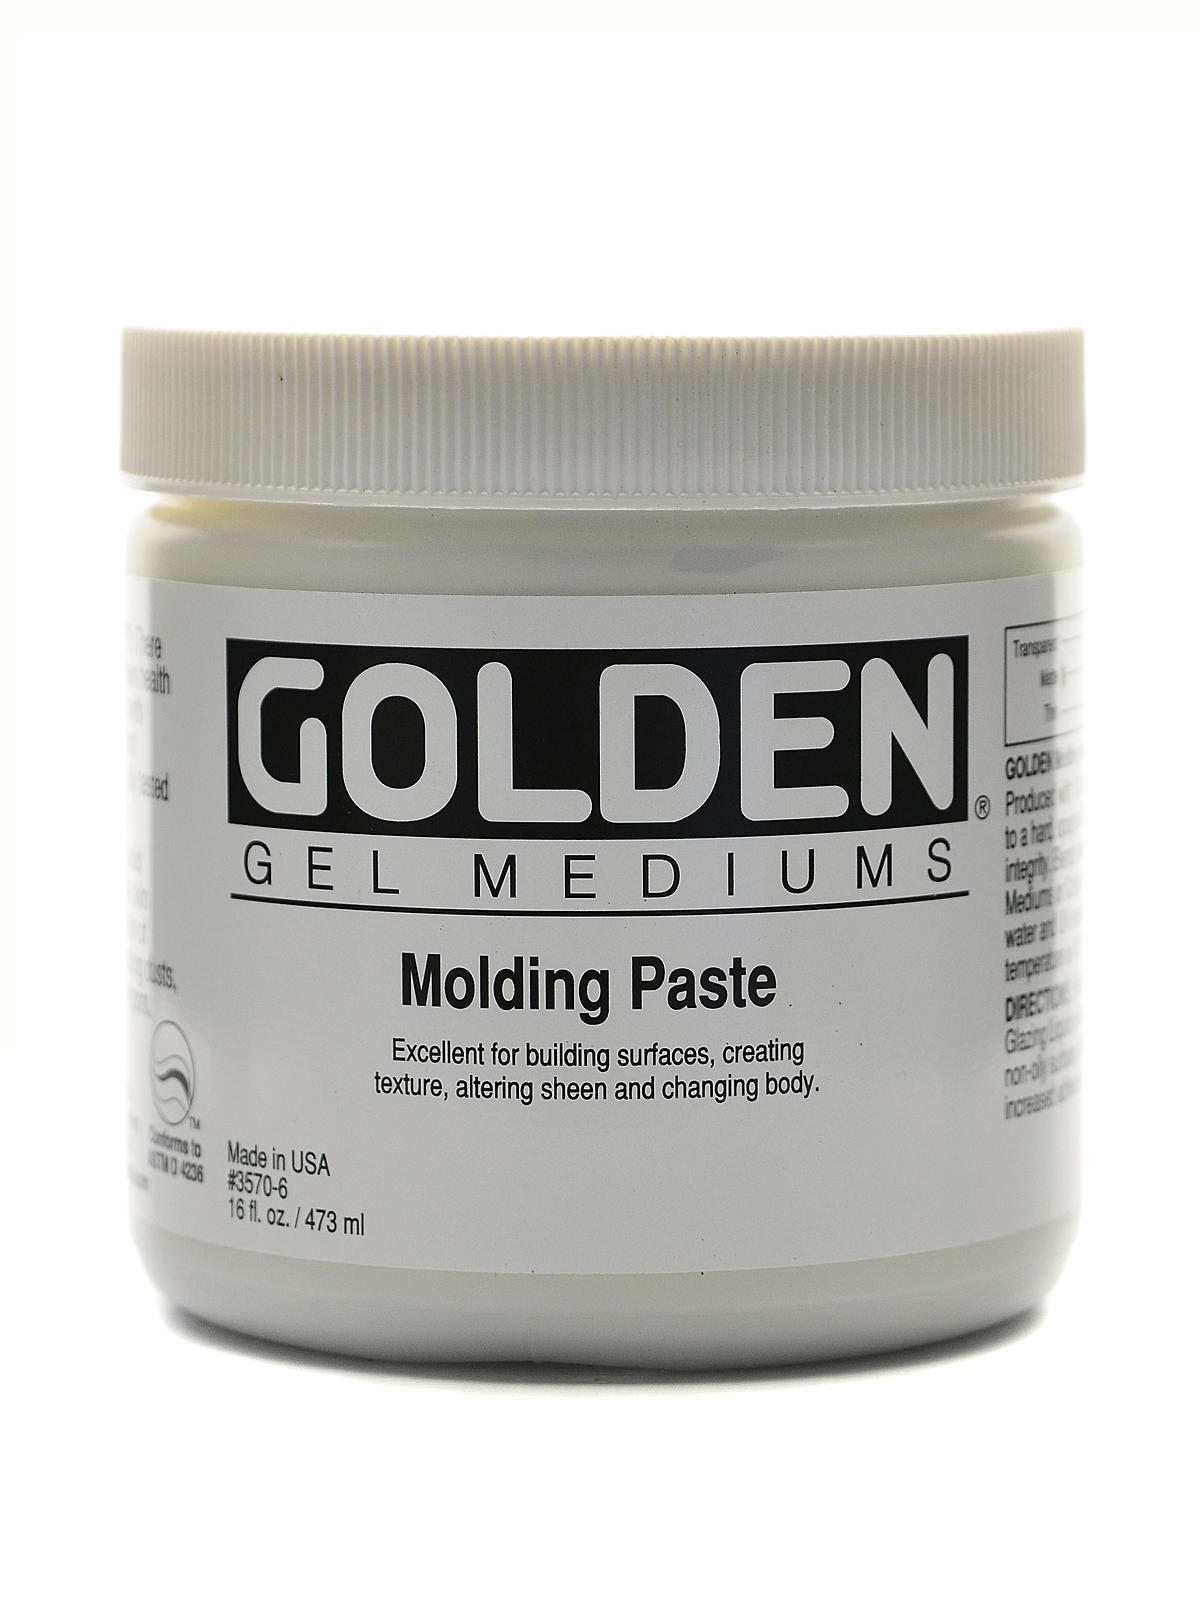 Molding Paste Standard 16 Oz.